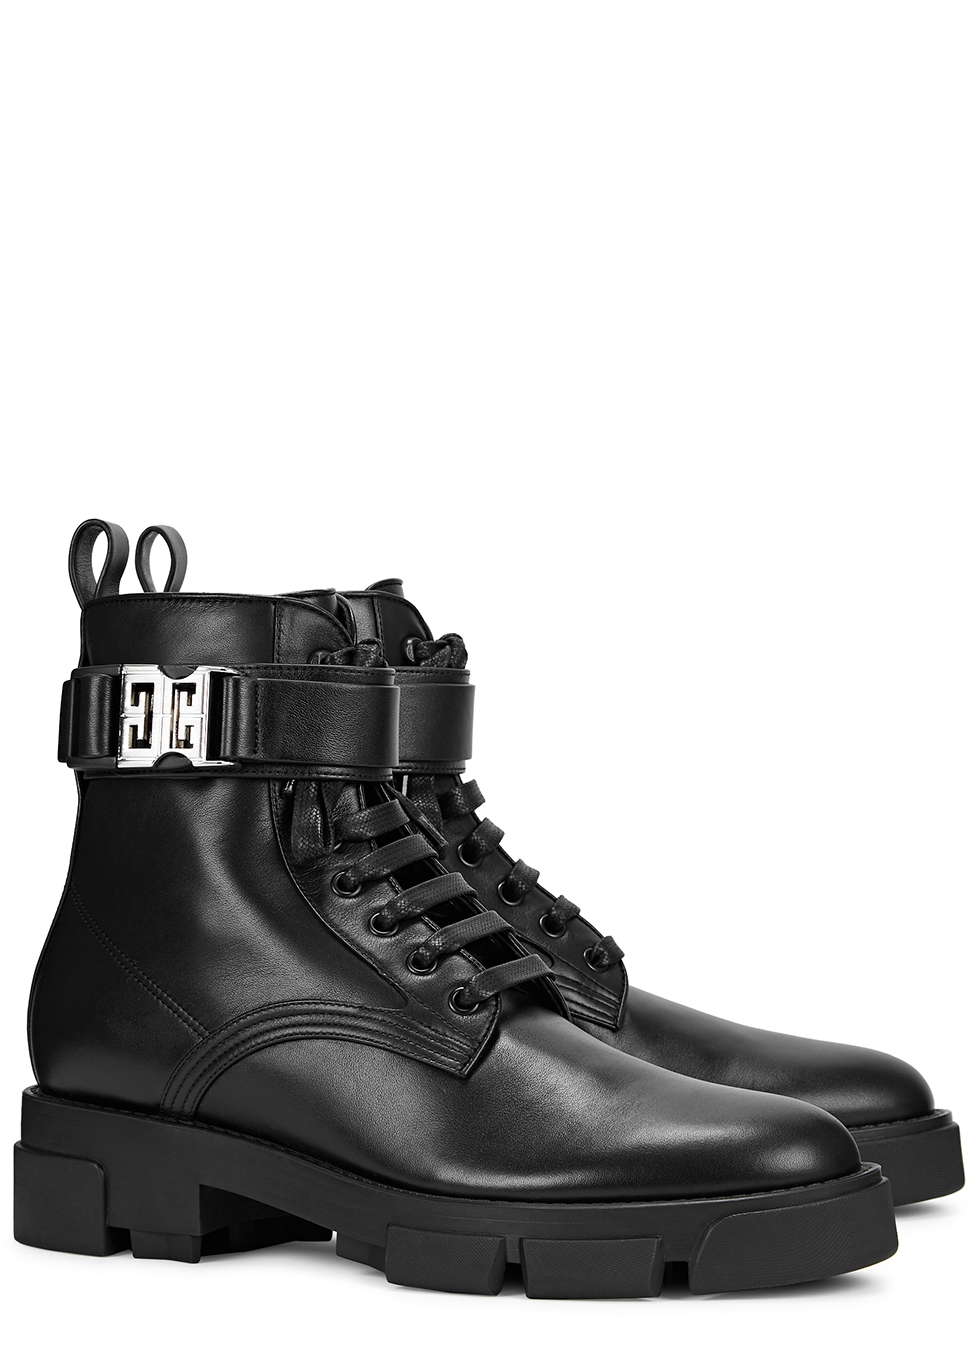 Givenchy Terra black leather combat boots - Harvey Nichols